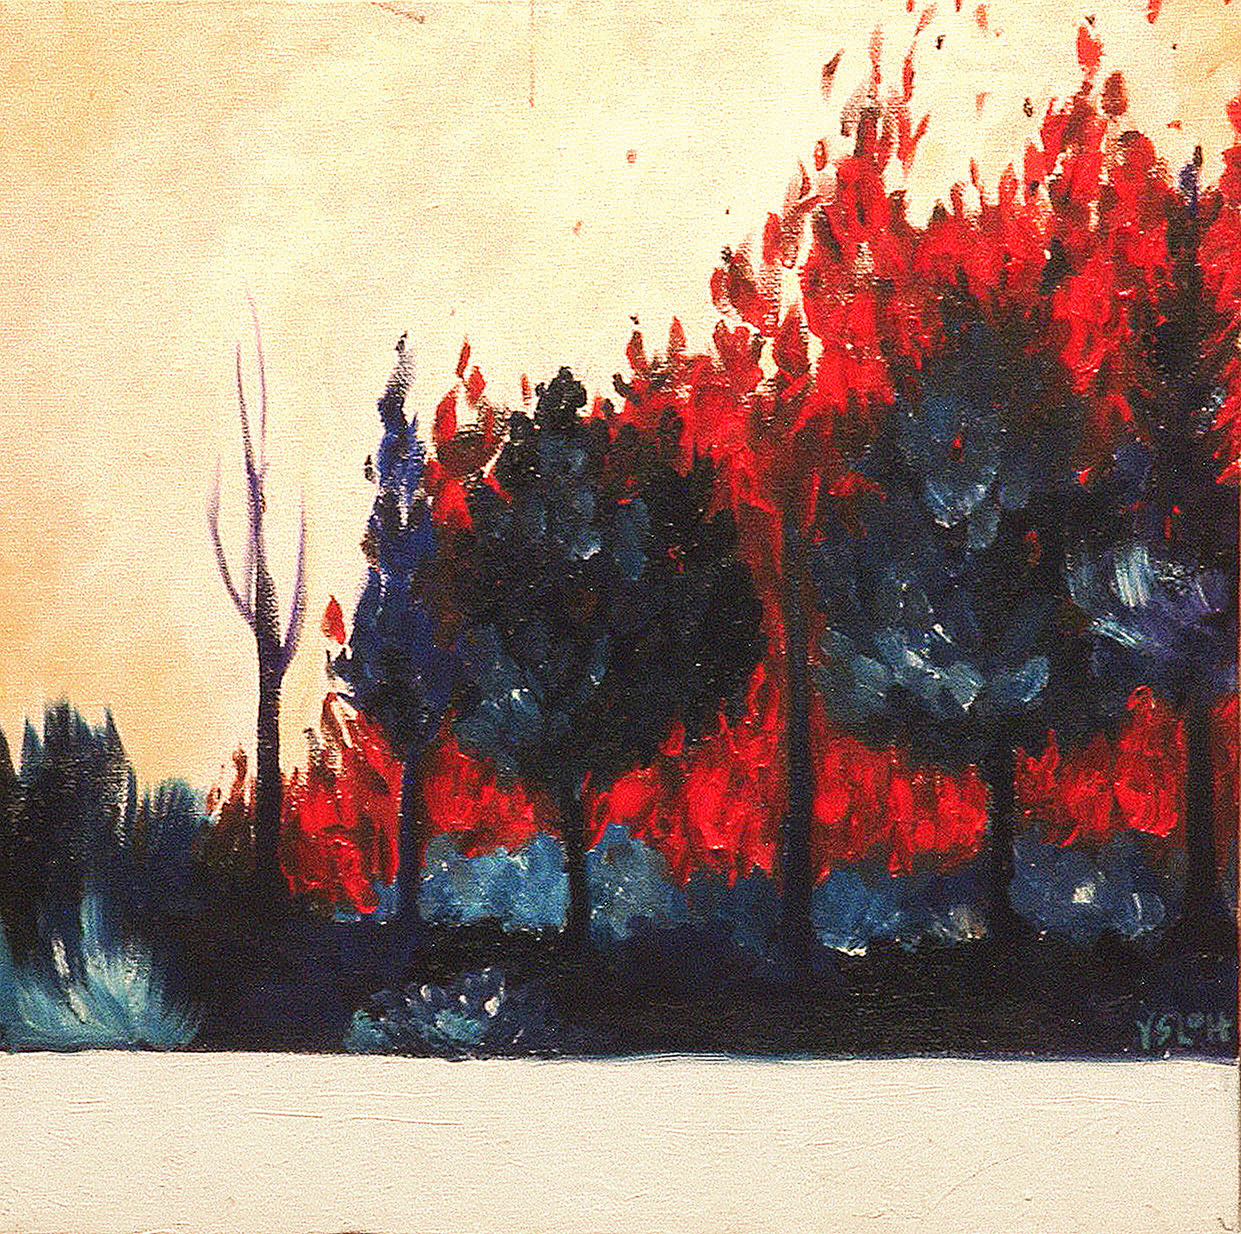   Burning Landscape No.2   oil on canvas, 12 x 12 